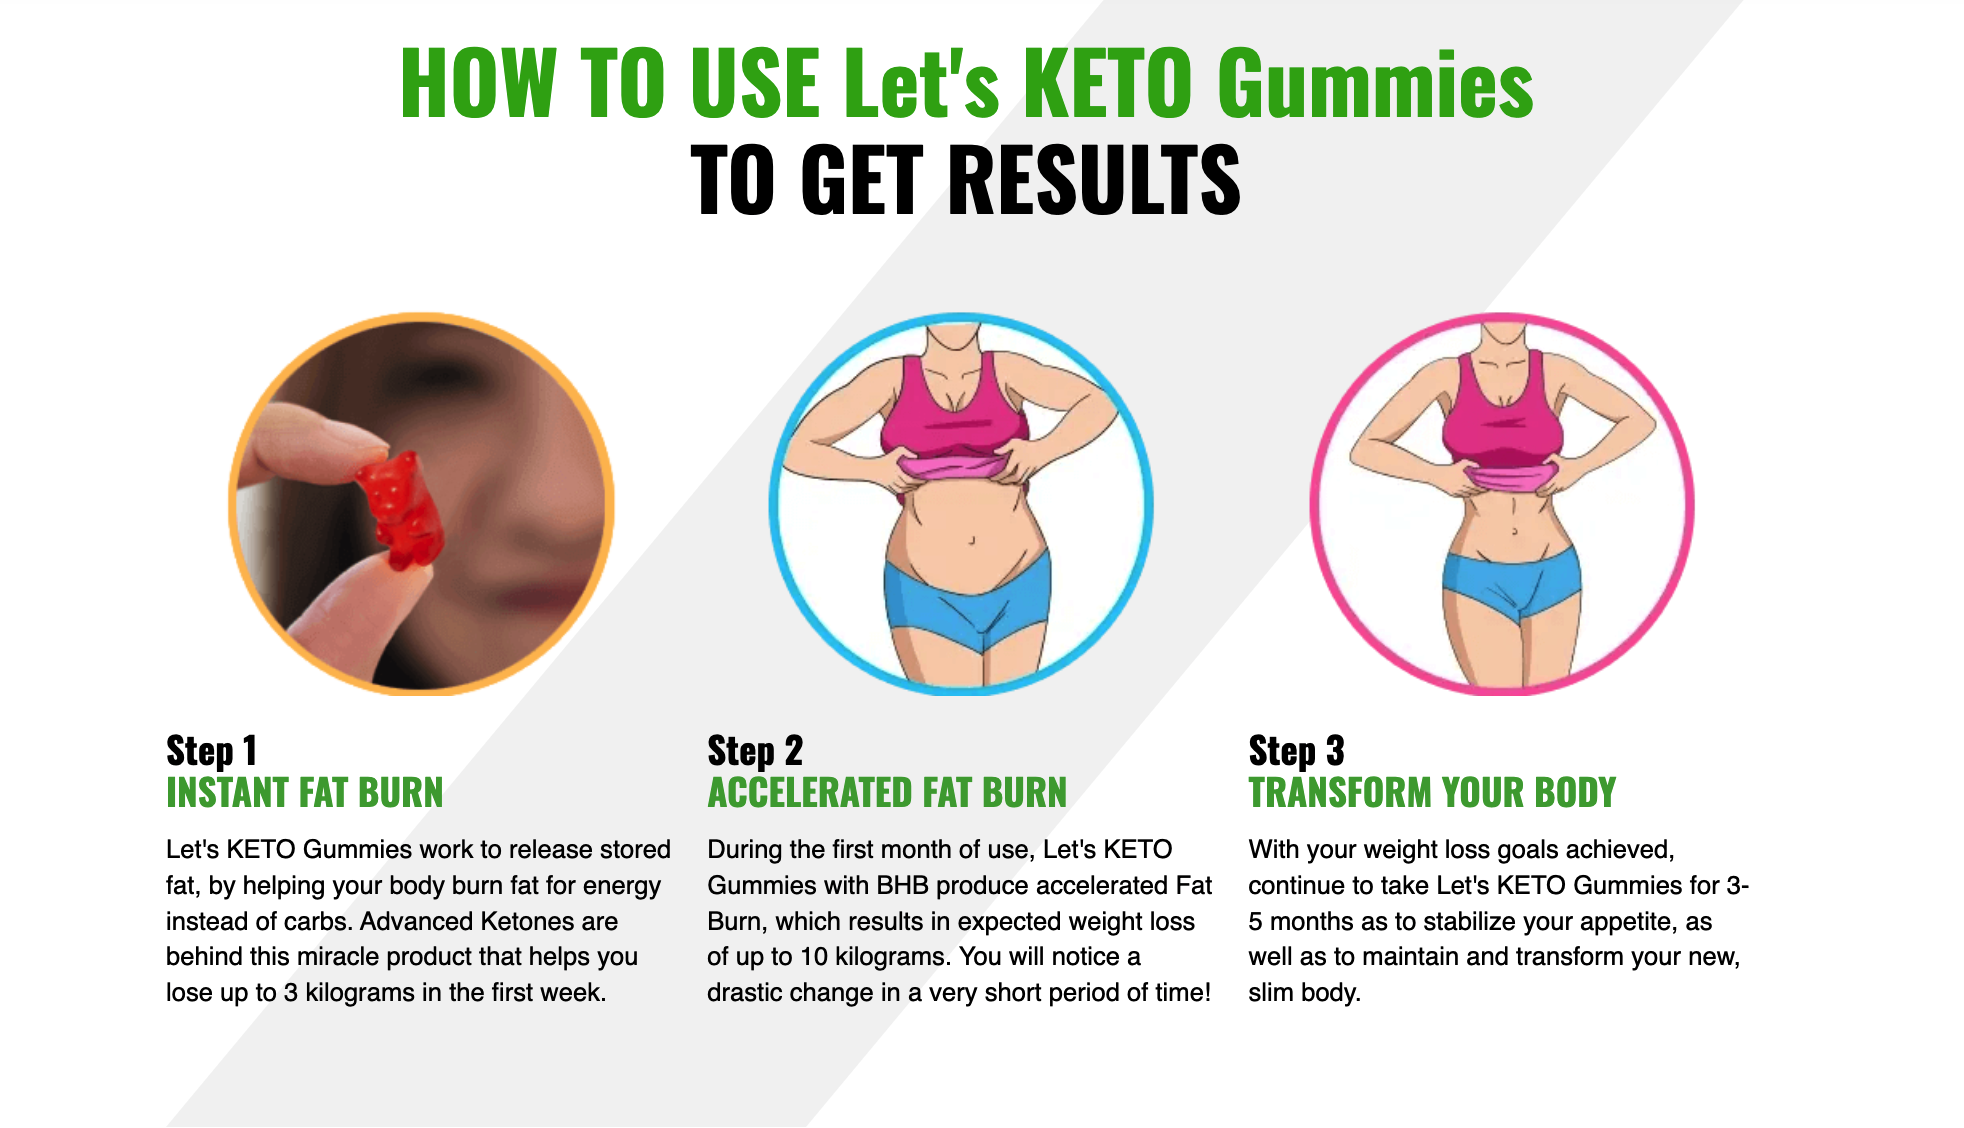 Let's Keto Gummies results